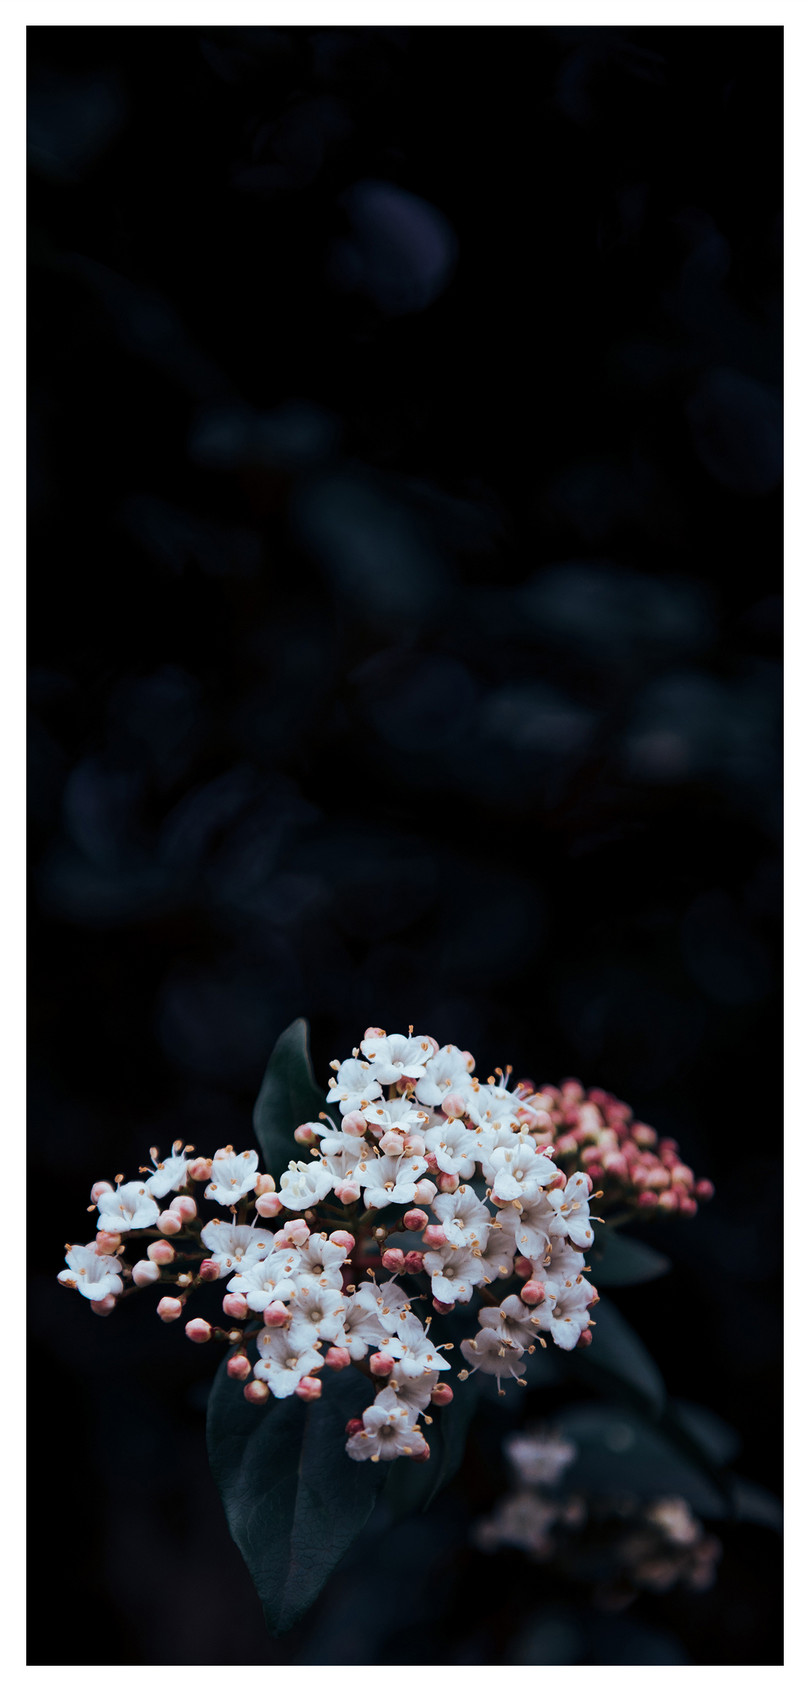 Dark Style Wildflower Cell Phone Wallpaper Background Image